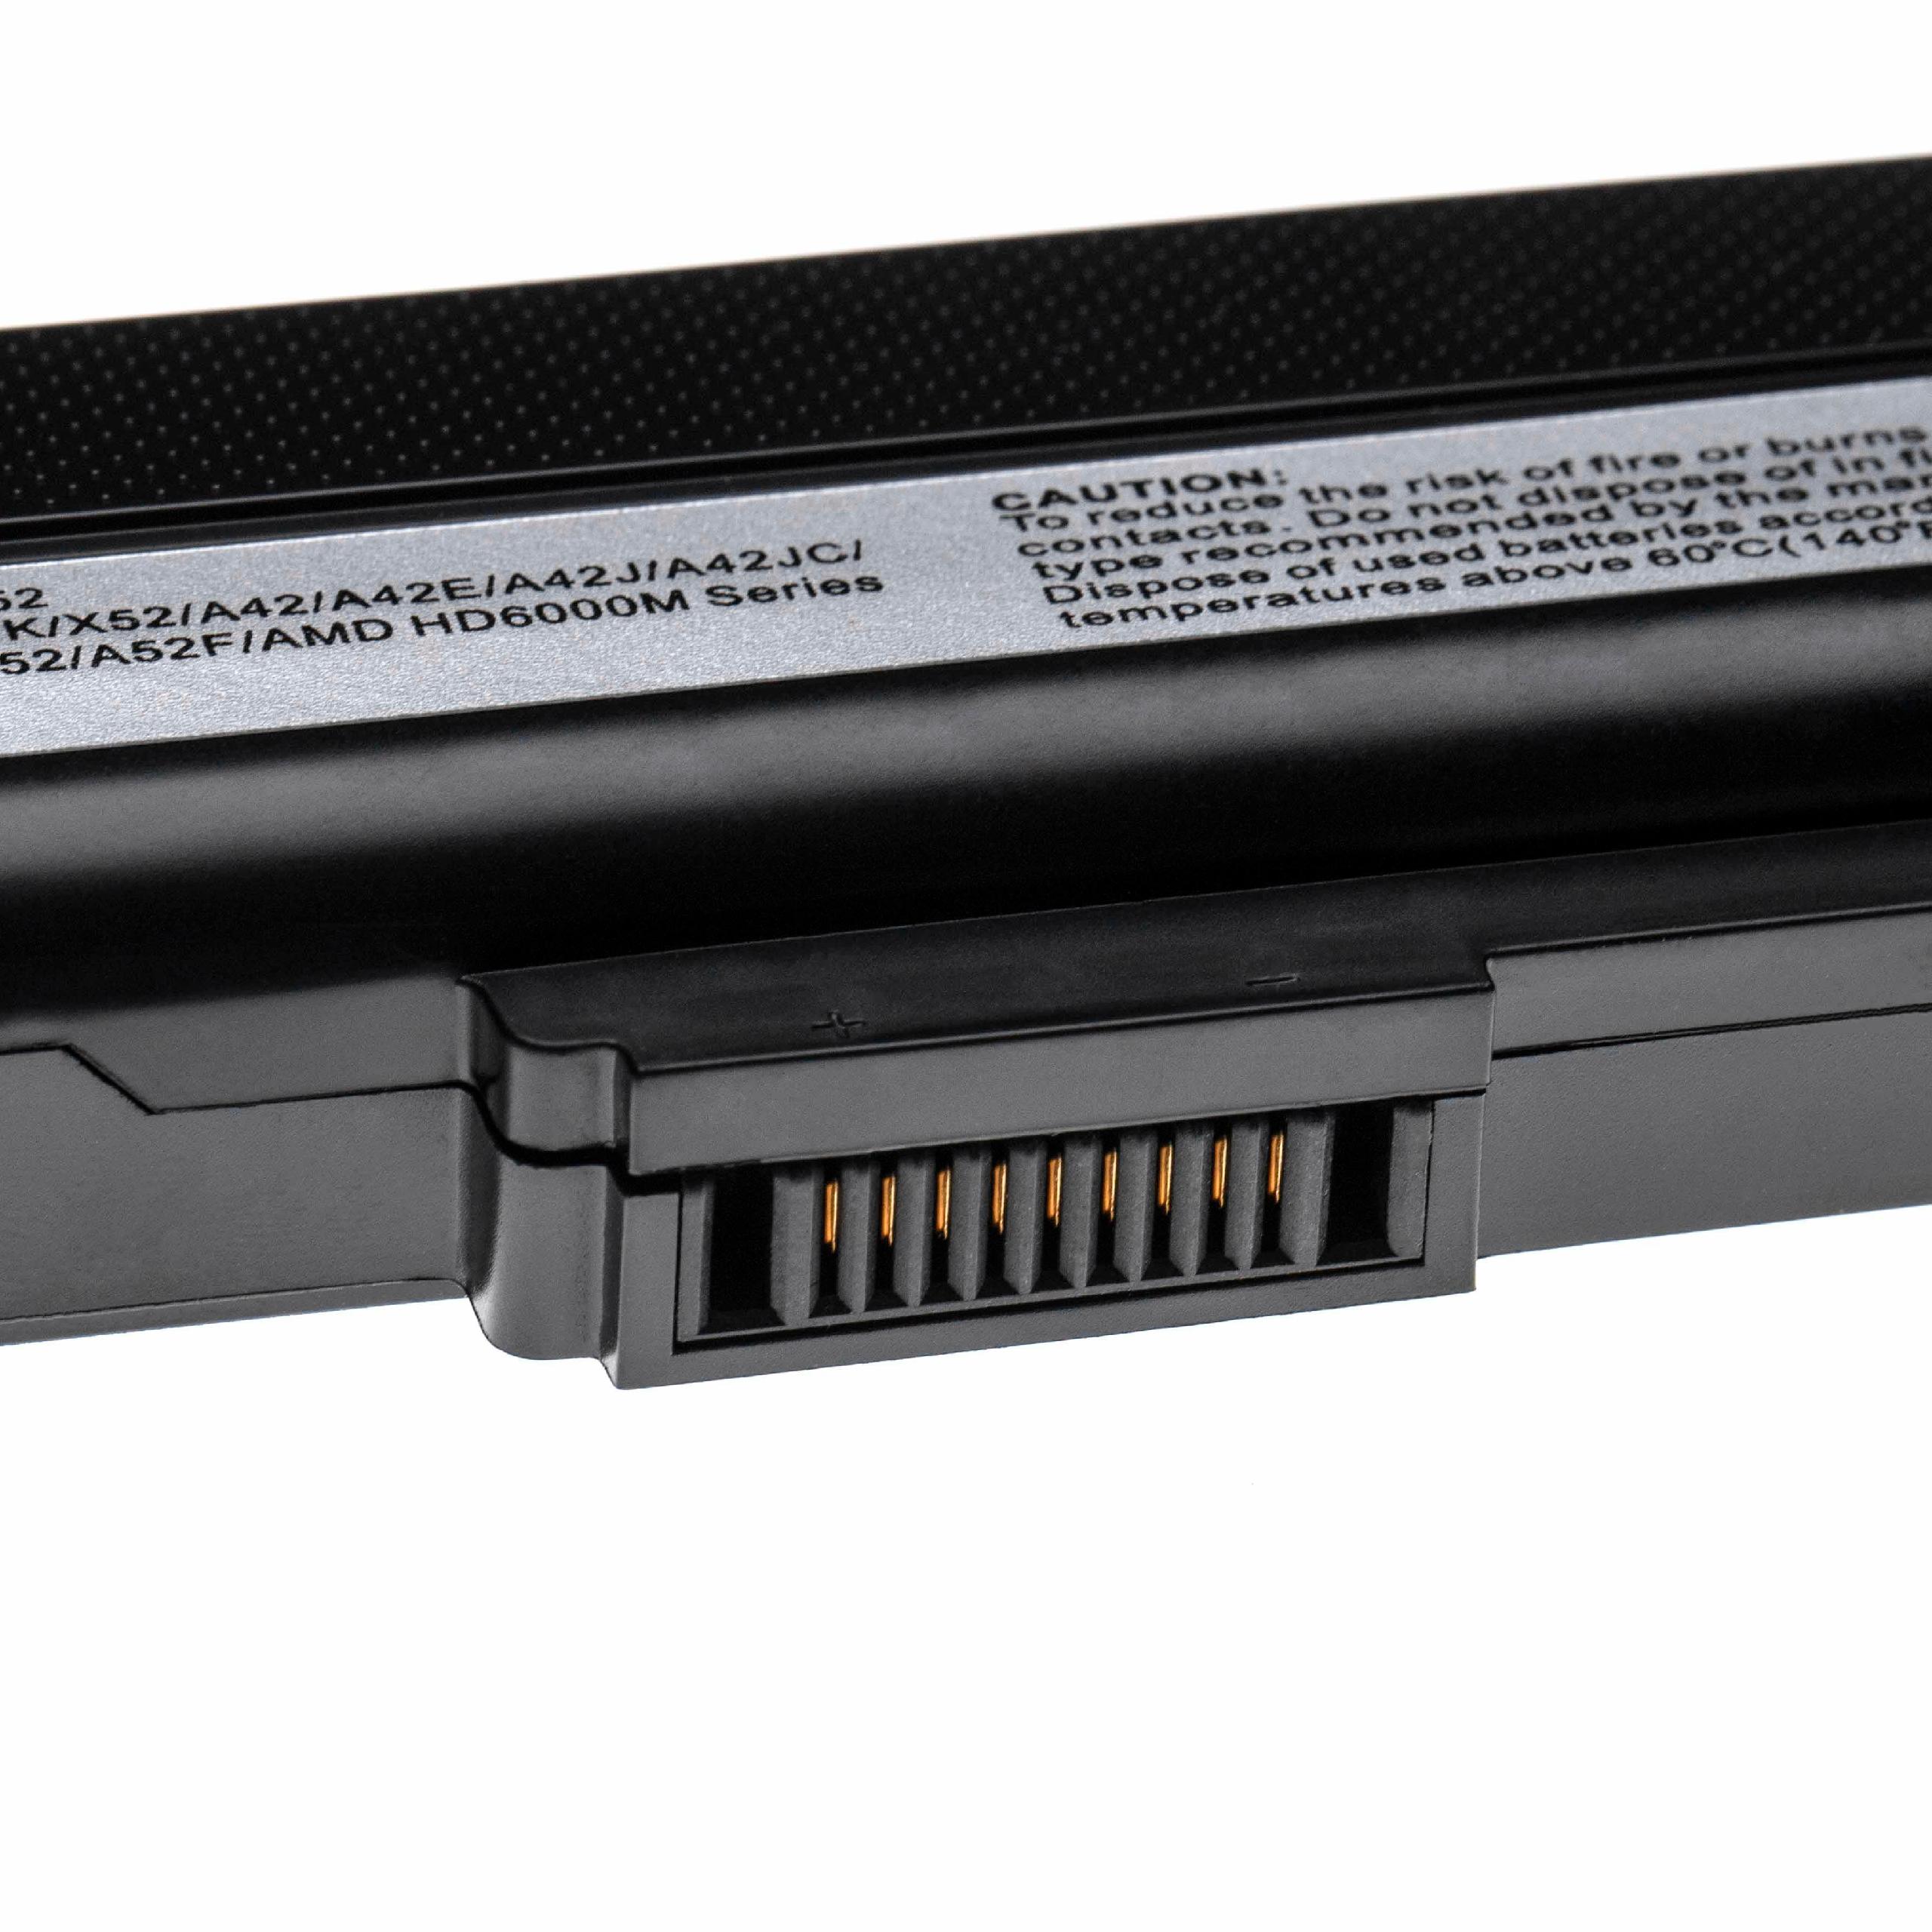 Akumulator do laptopa zamiennik Asus A31-B53, 90-NYX1B1000Y, 70-NXM1B2200Z - 5200 mAh 10,8 V LiPo, czarny